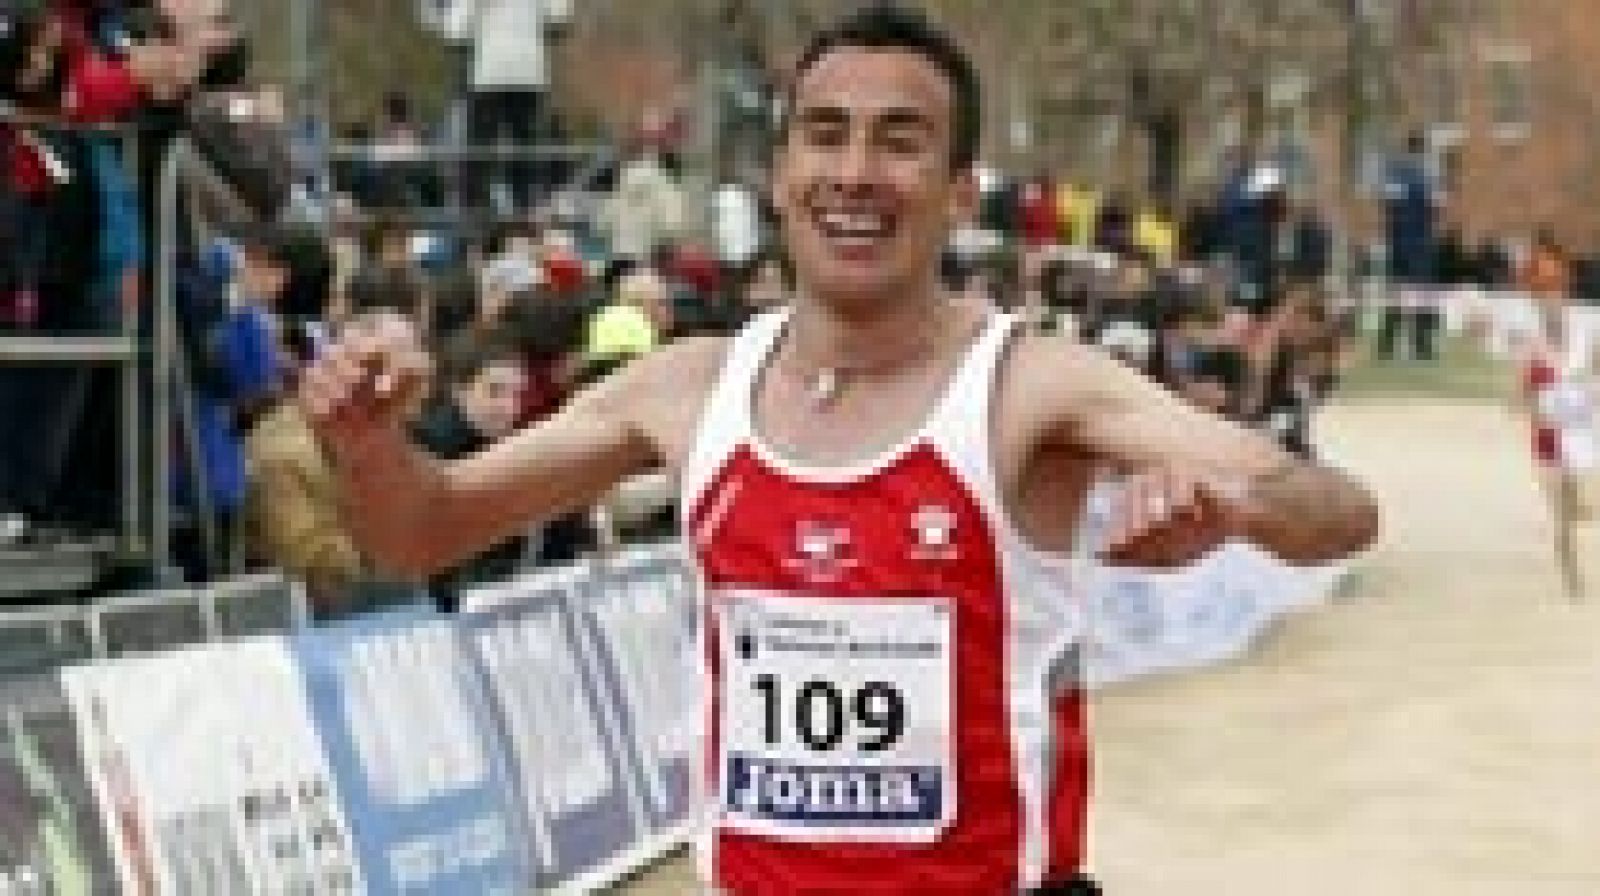 Telediario 1: Mohamed Marhoum, campeón de España de cross, suspendido cautelarmente por dopaje | RTVE Play